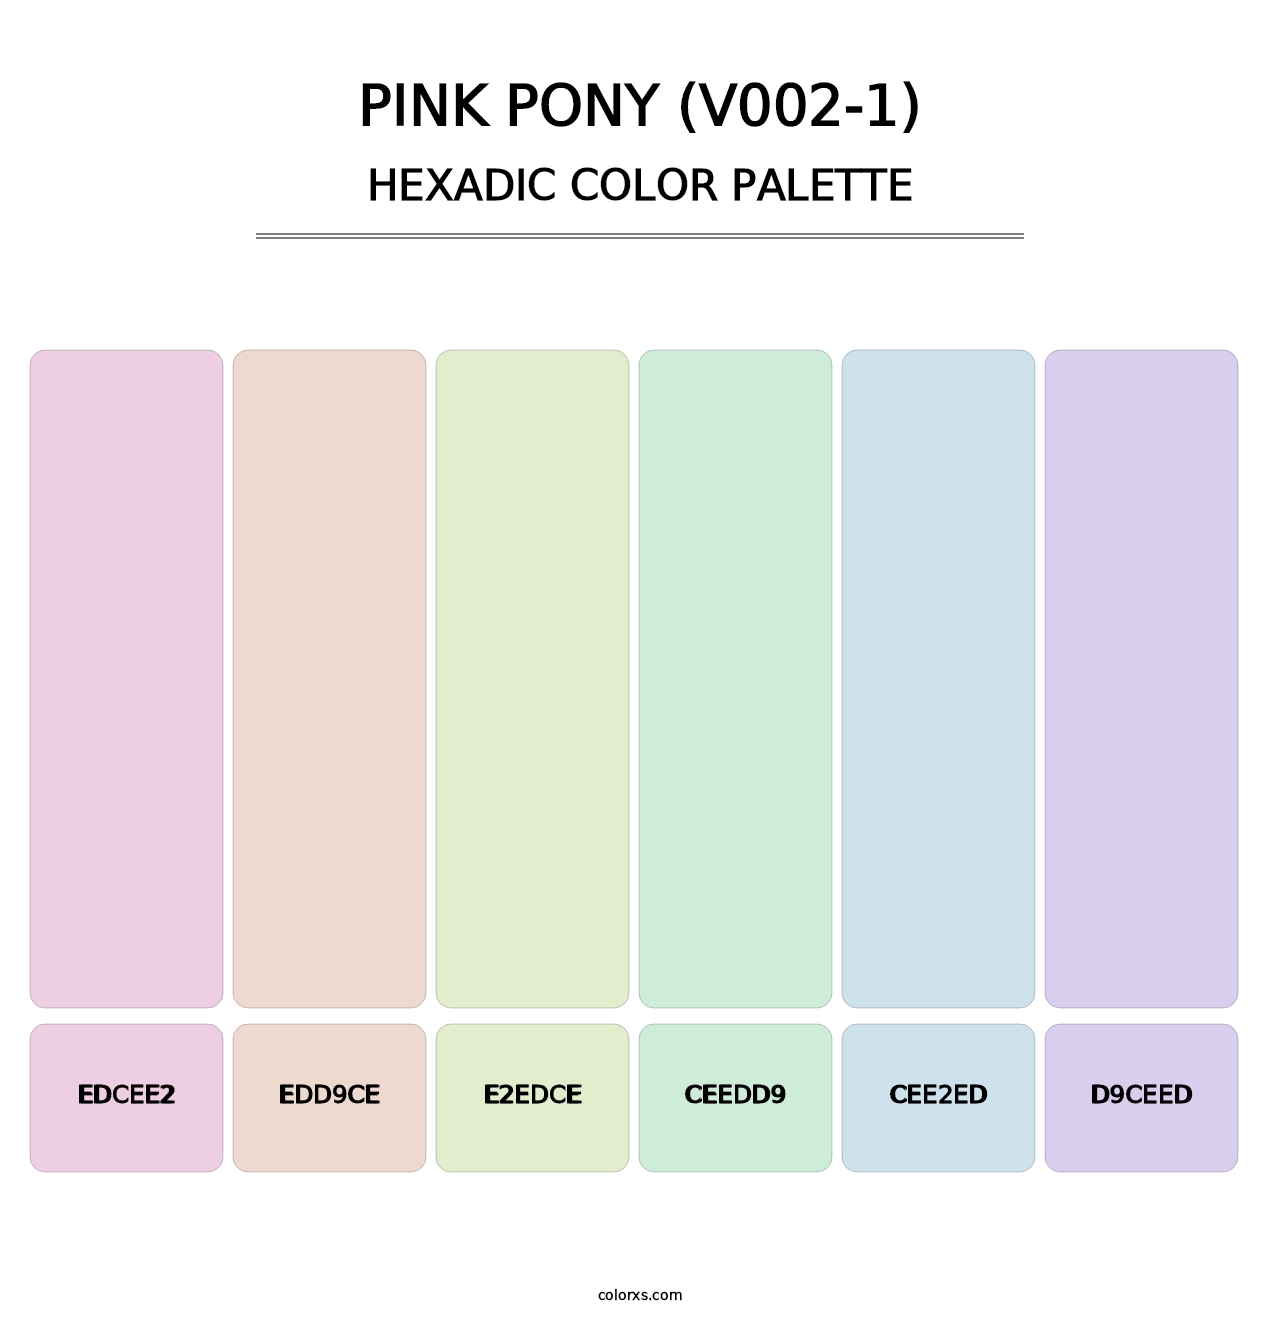 Pink Pony (V002-1) - Hexadic Color Palette